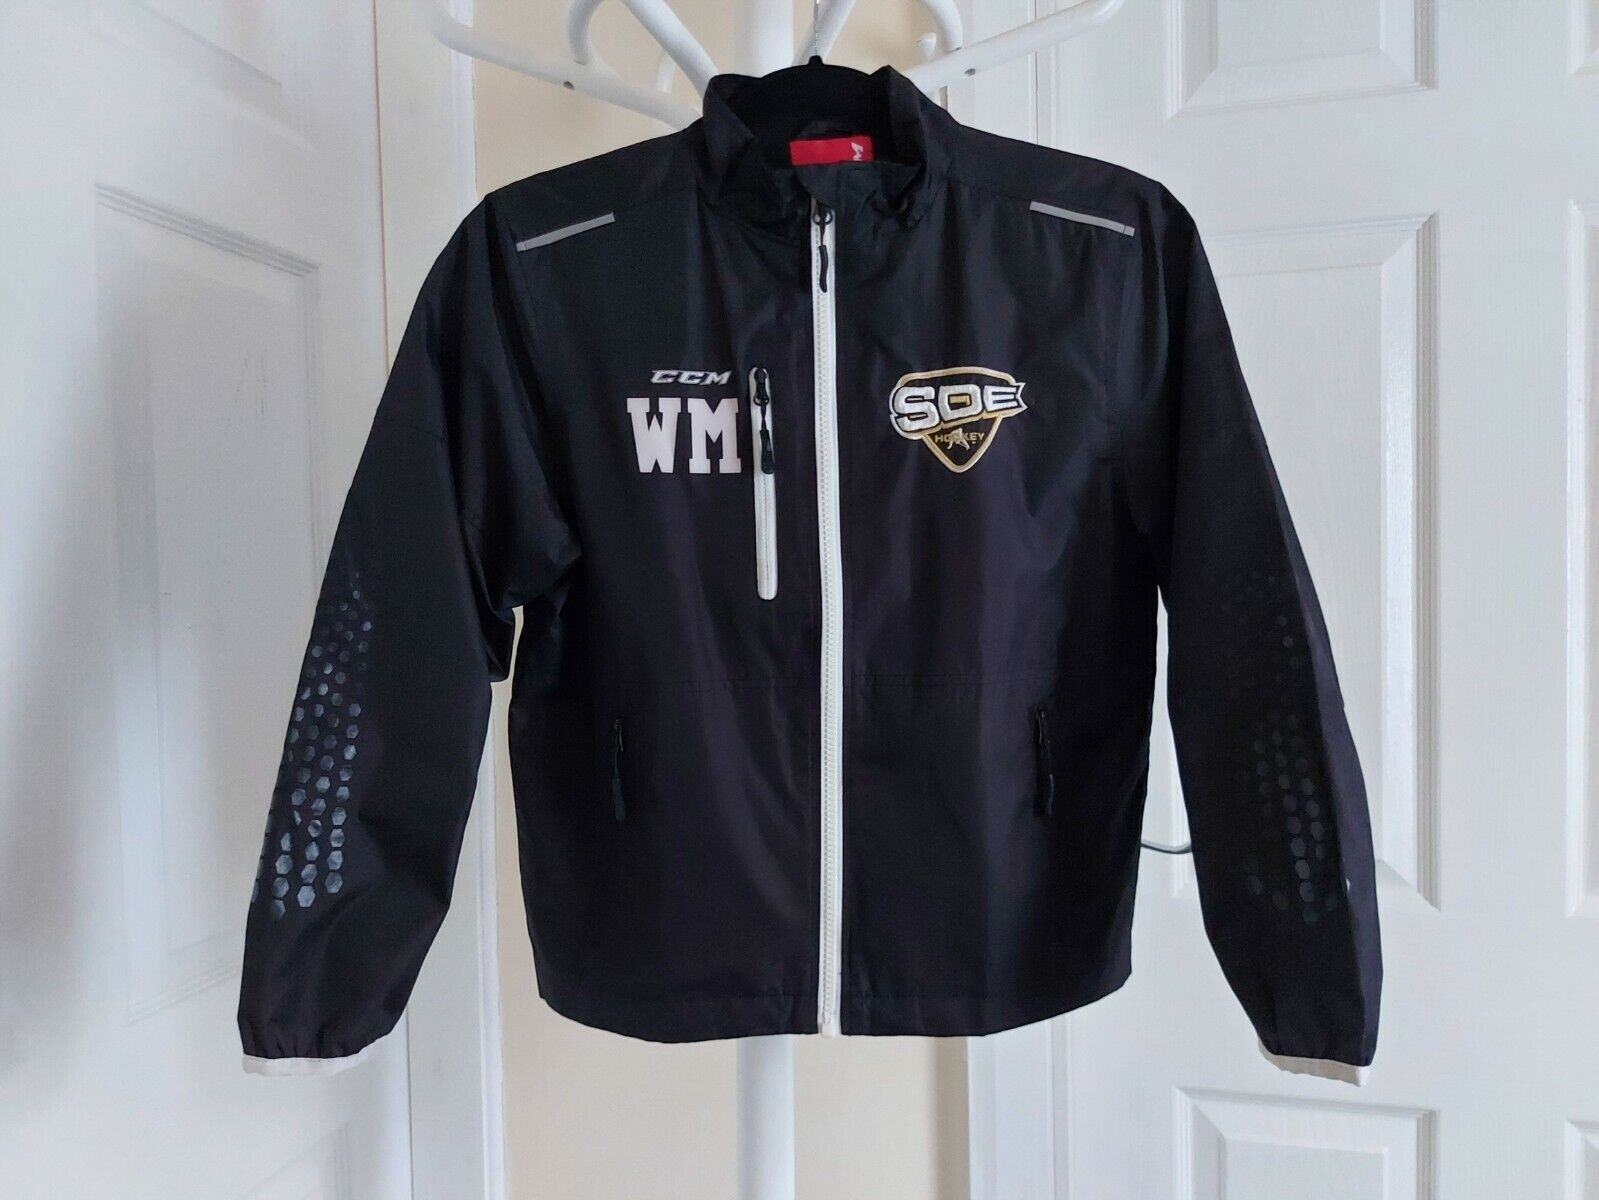 Jacket”CCM”WM Popular standard Hockey Gear Sport Ringen Year Size:10 Black Colour Translated